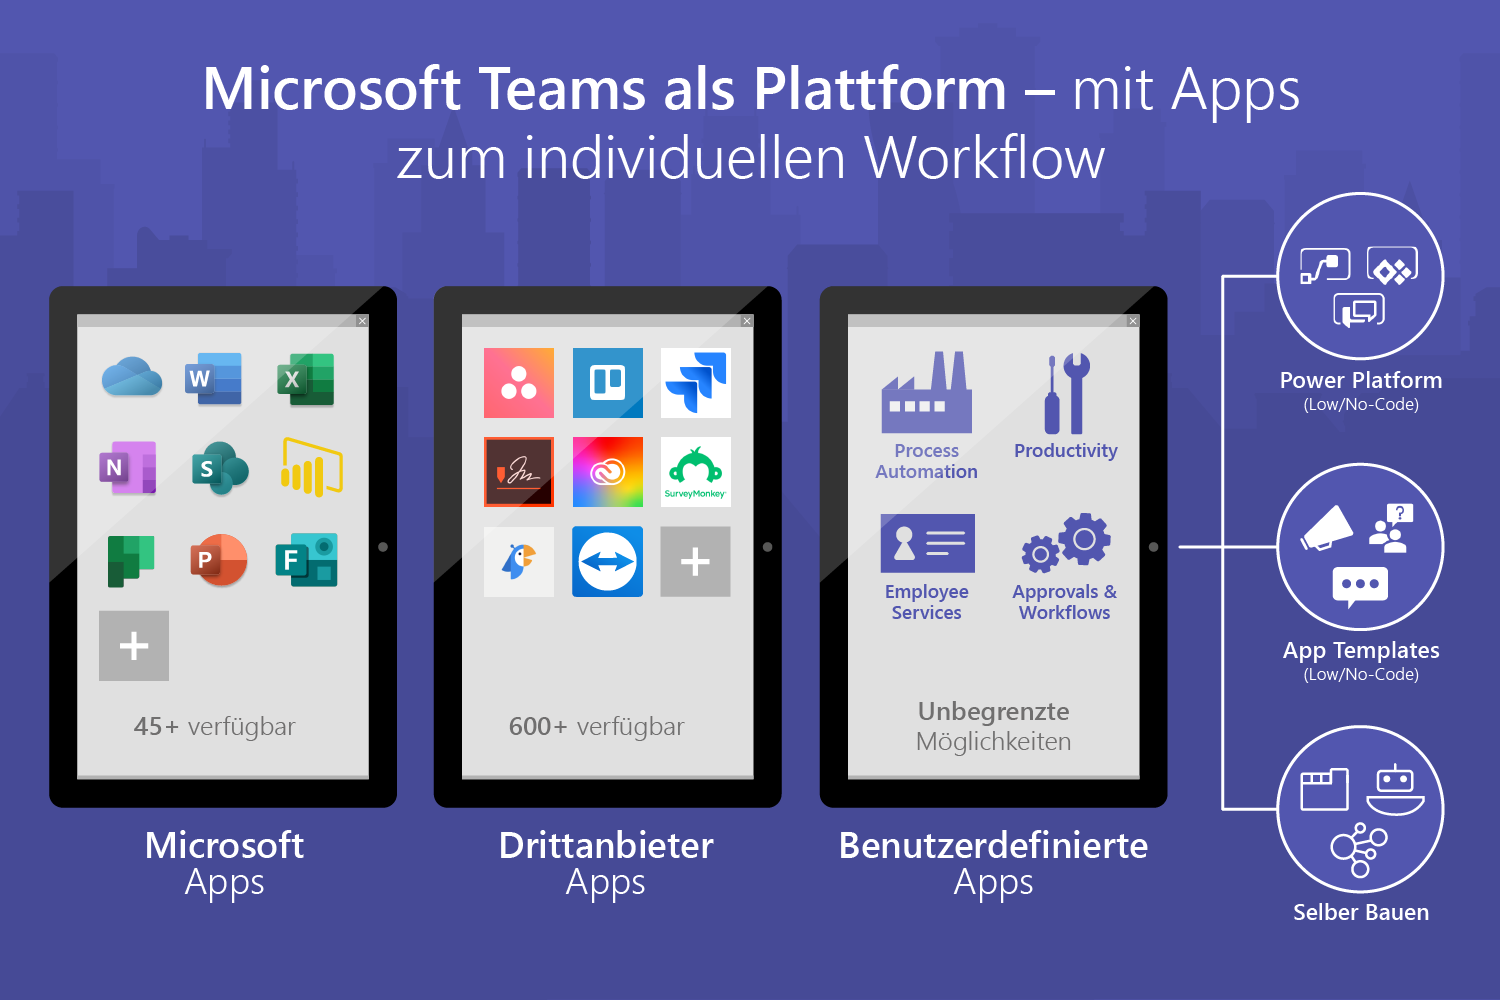 Microsoft Teams: The Future of Communication